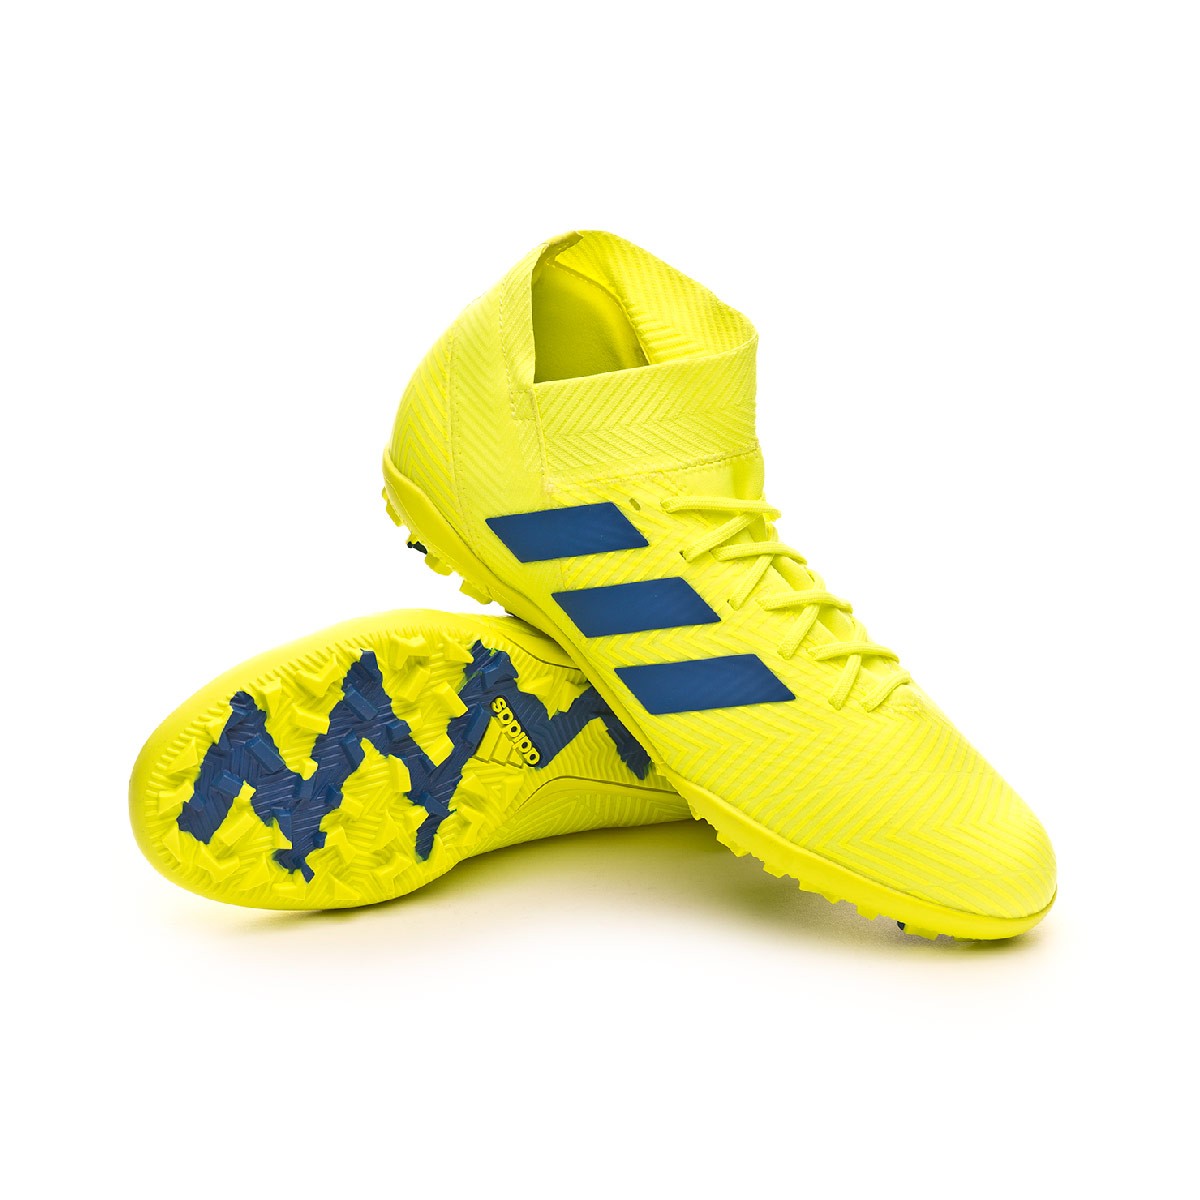 astro turf football boots adidas